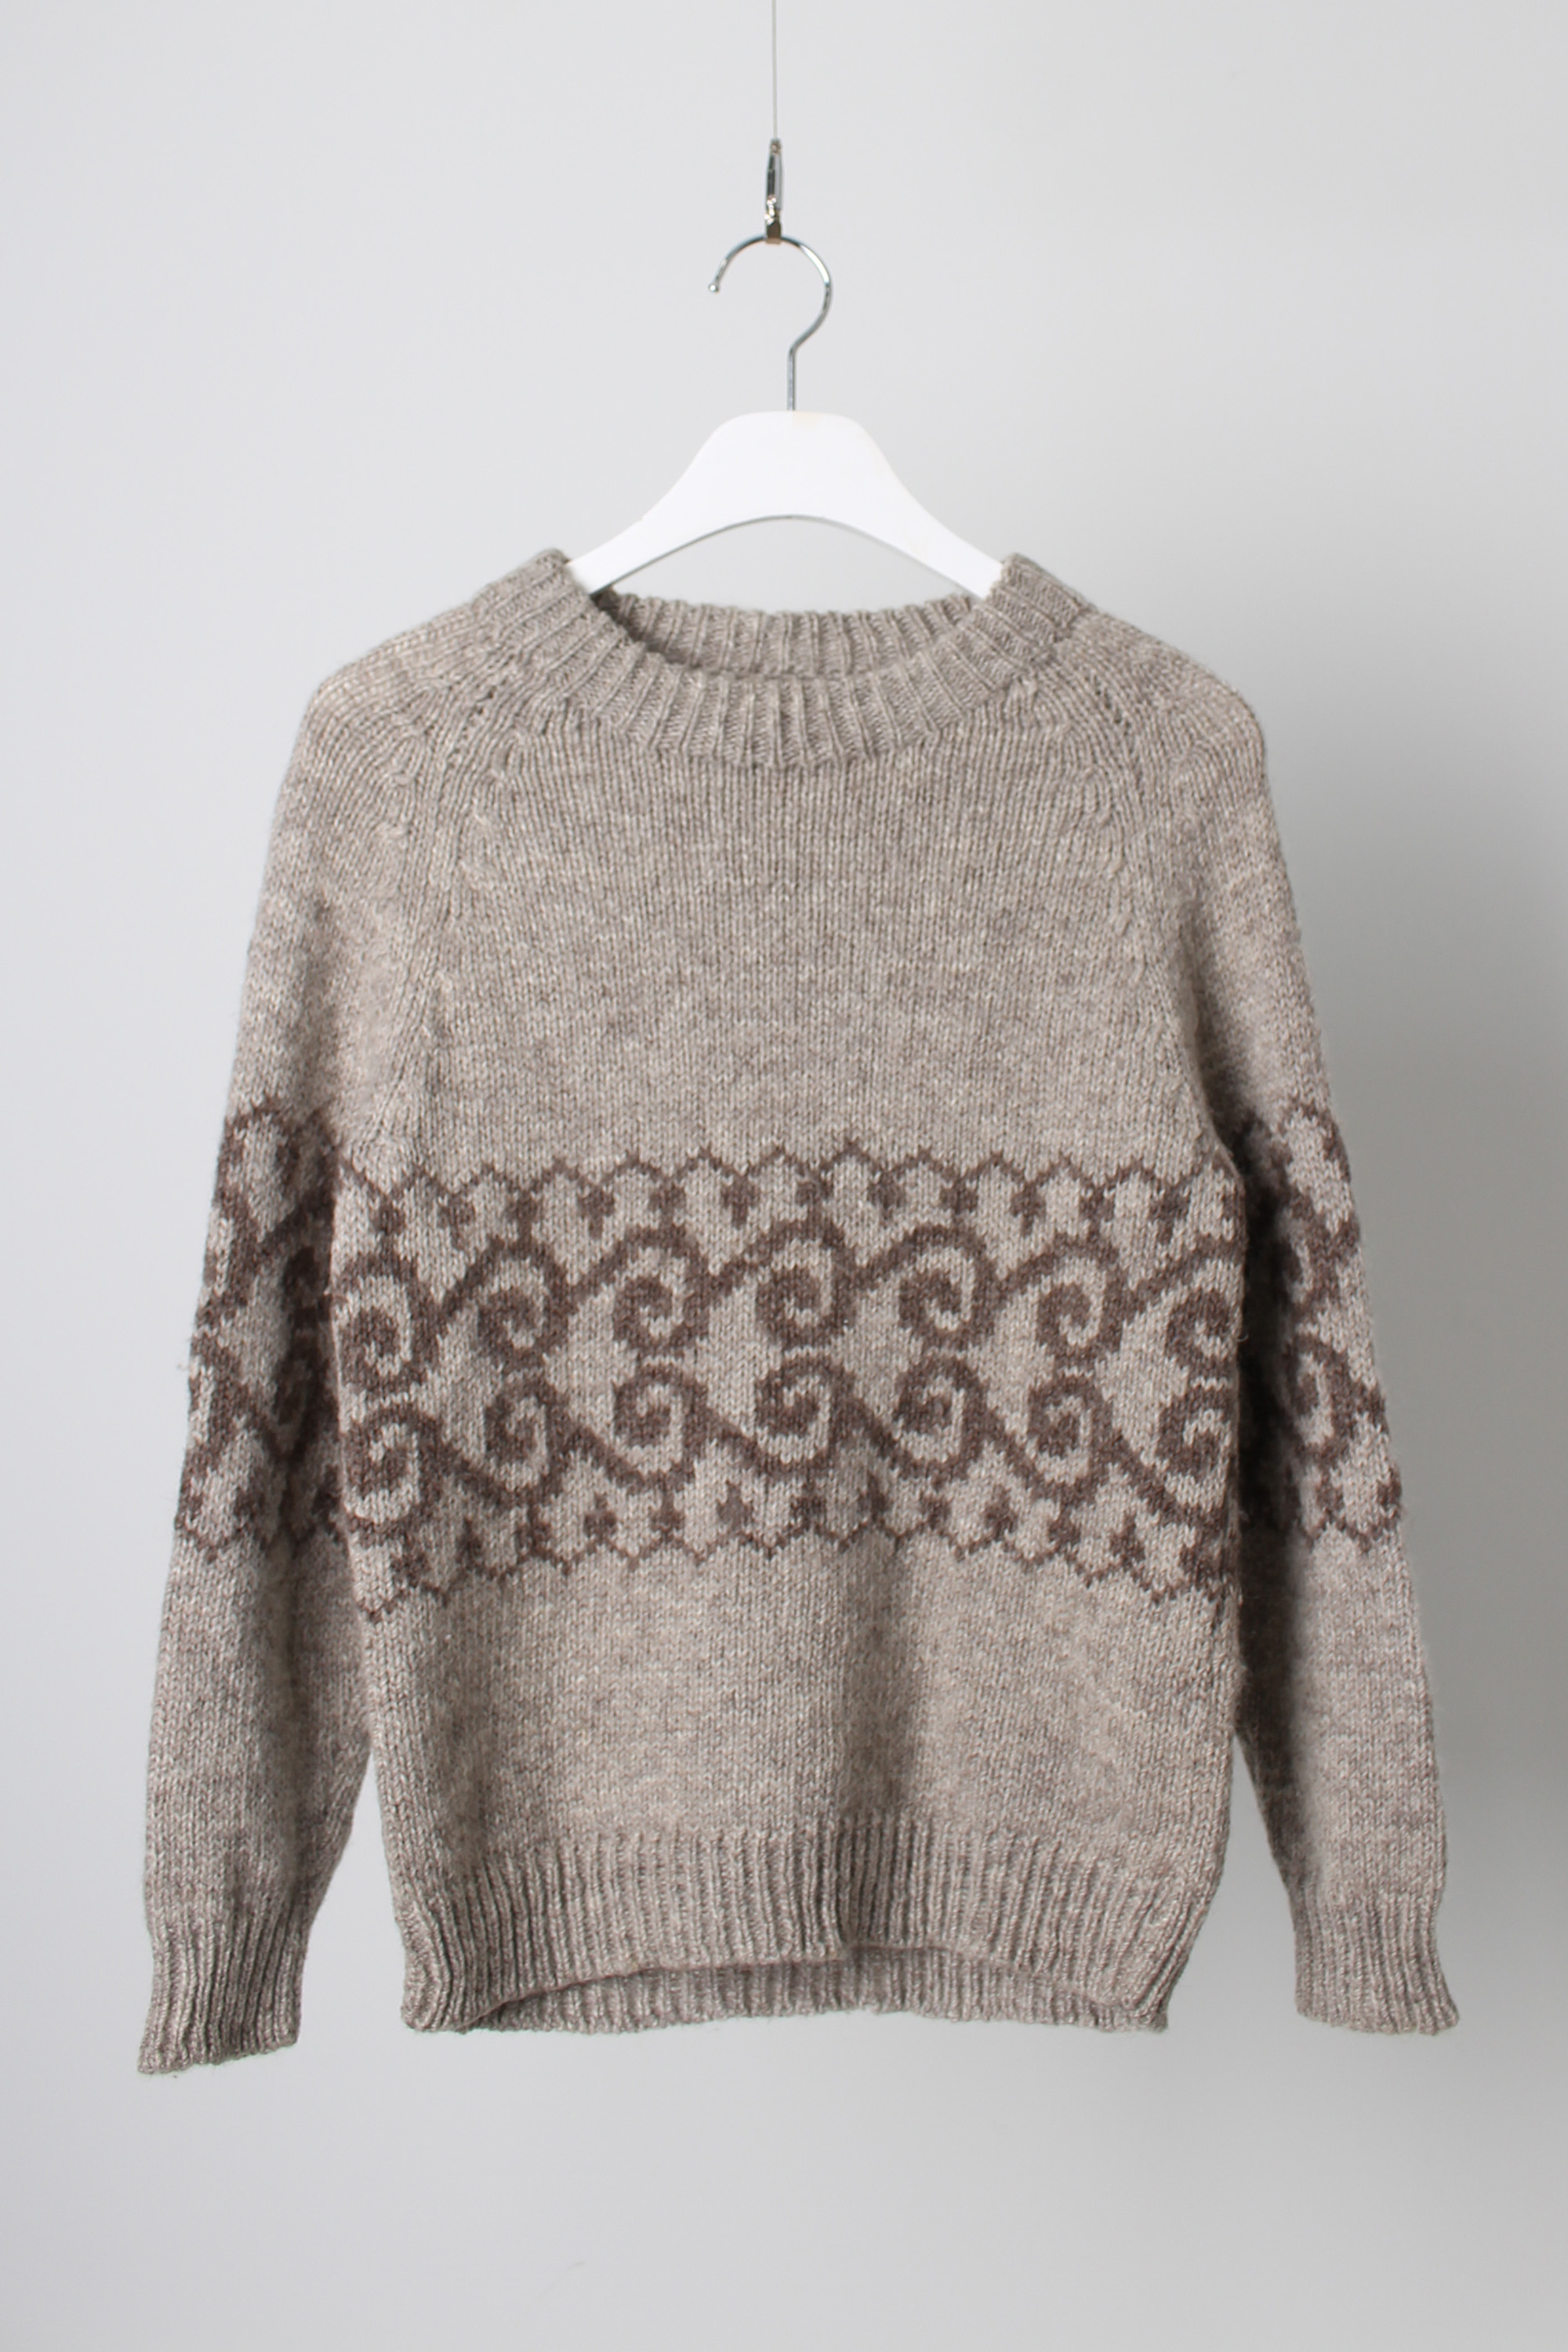 rapaki mahana wool knit